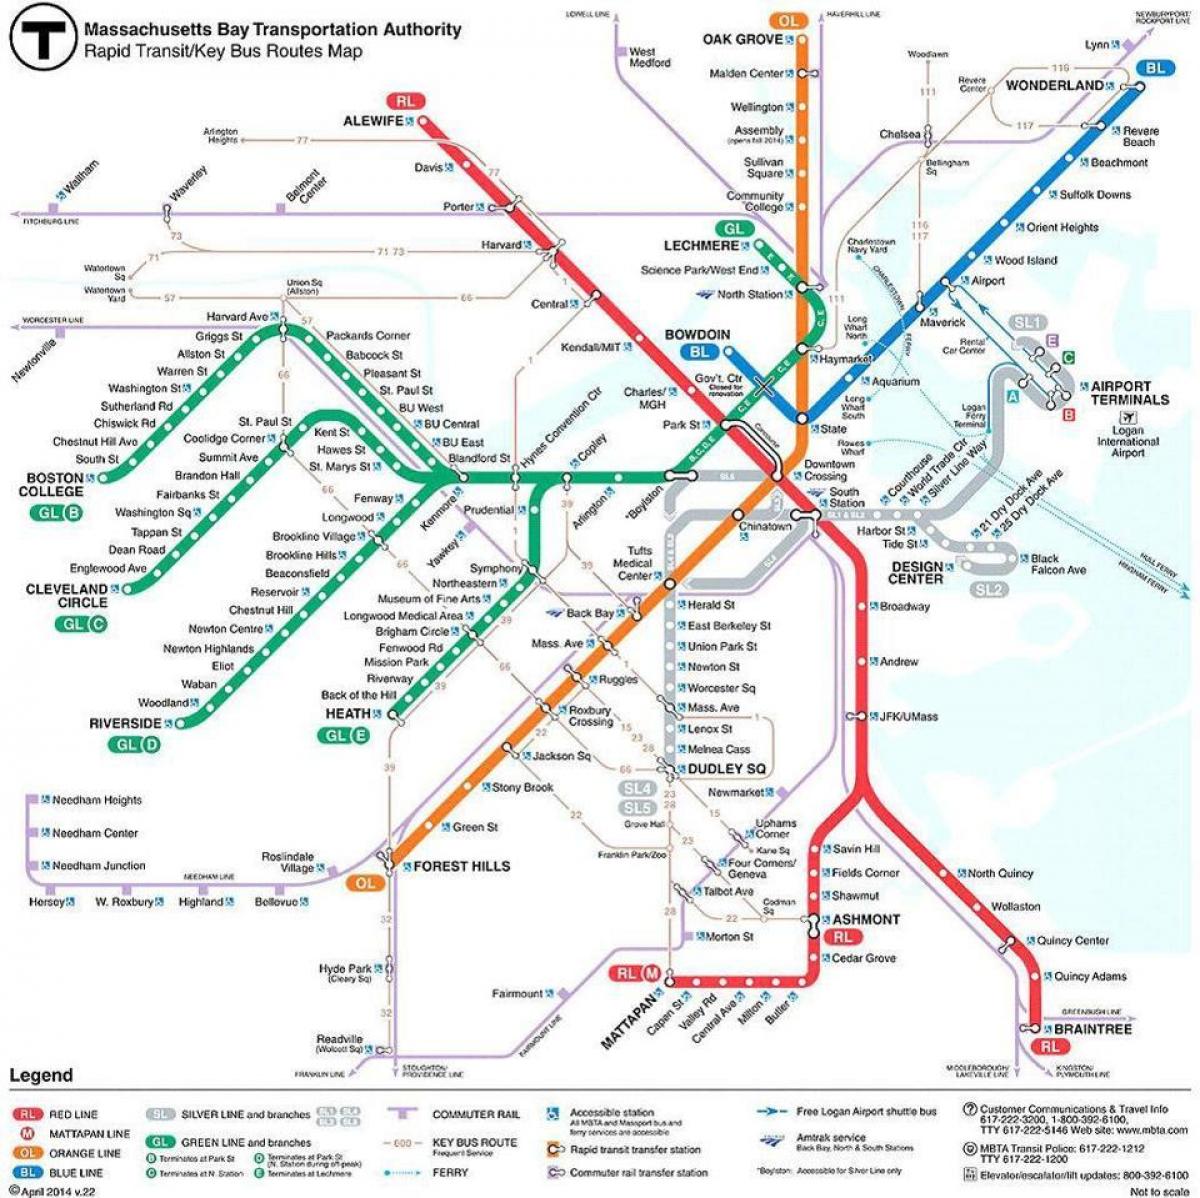 map of MBTA